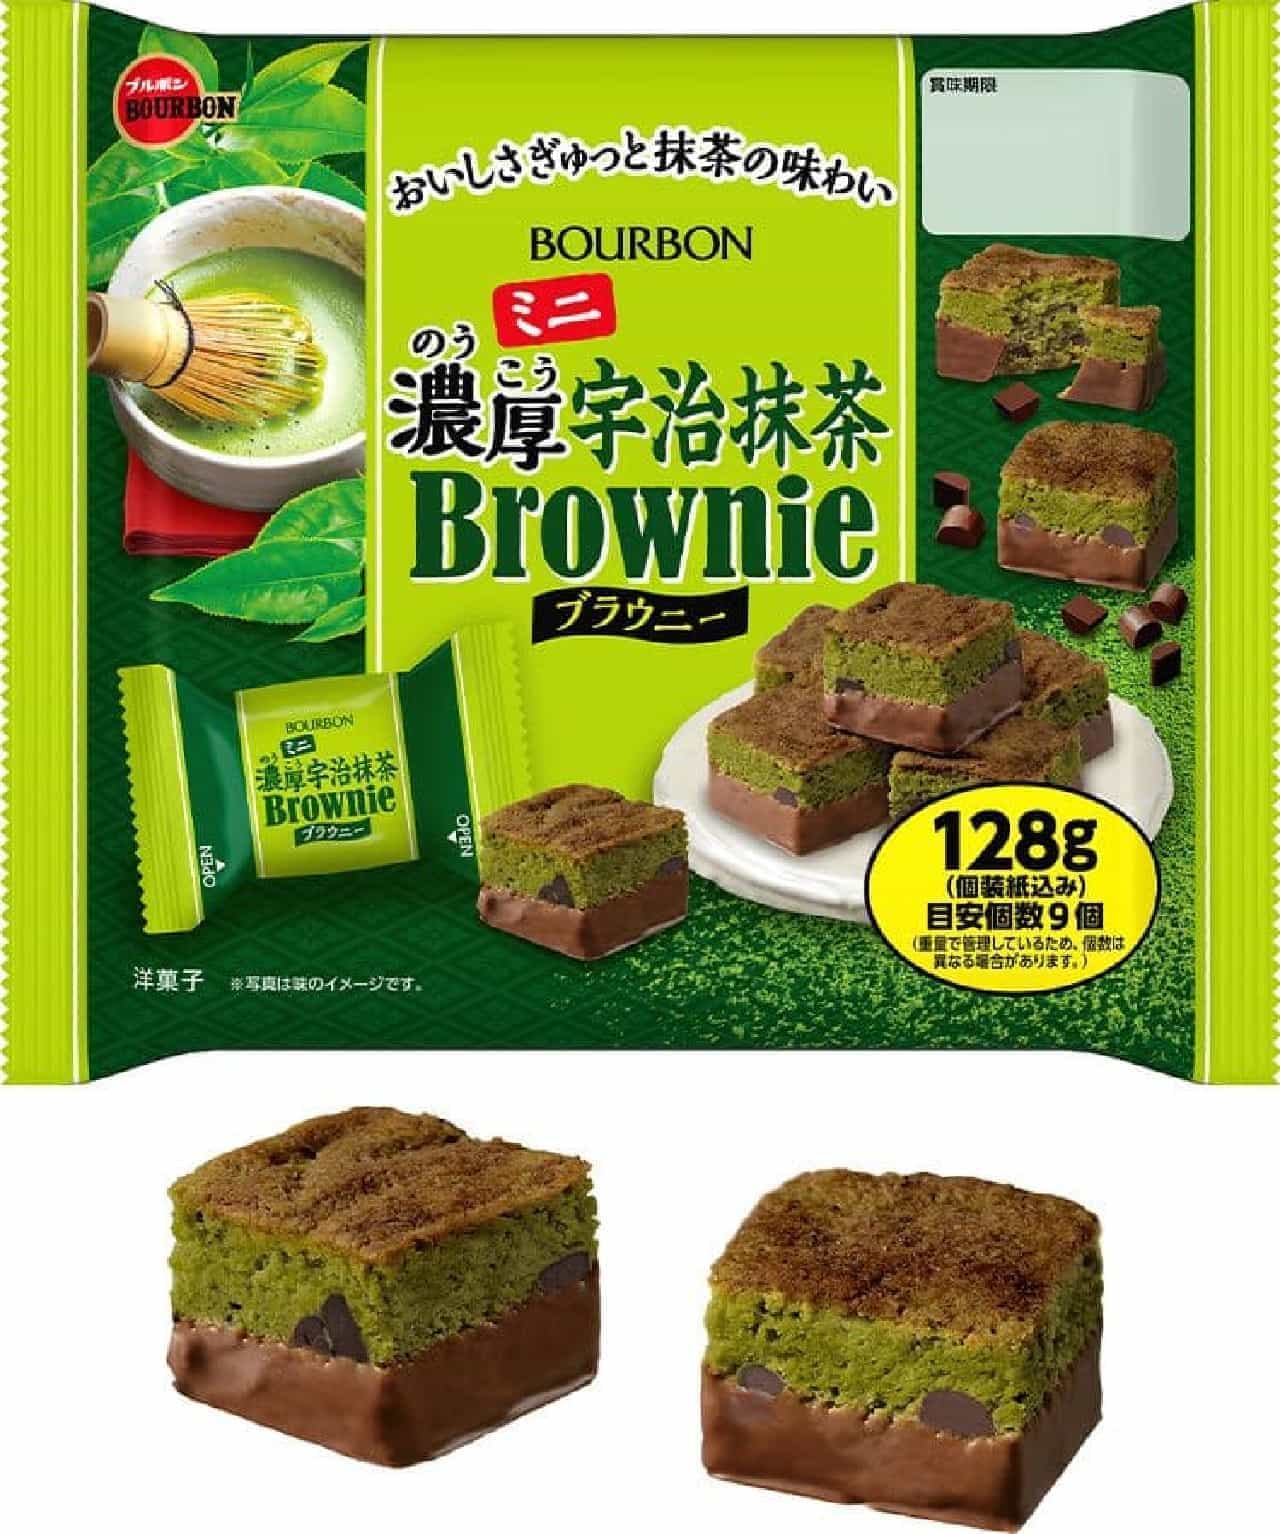 Bourbon "Mini Thick Uji Green Tea Brownie